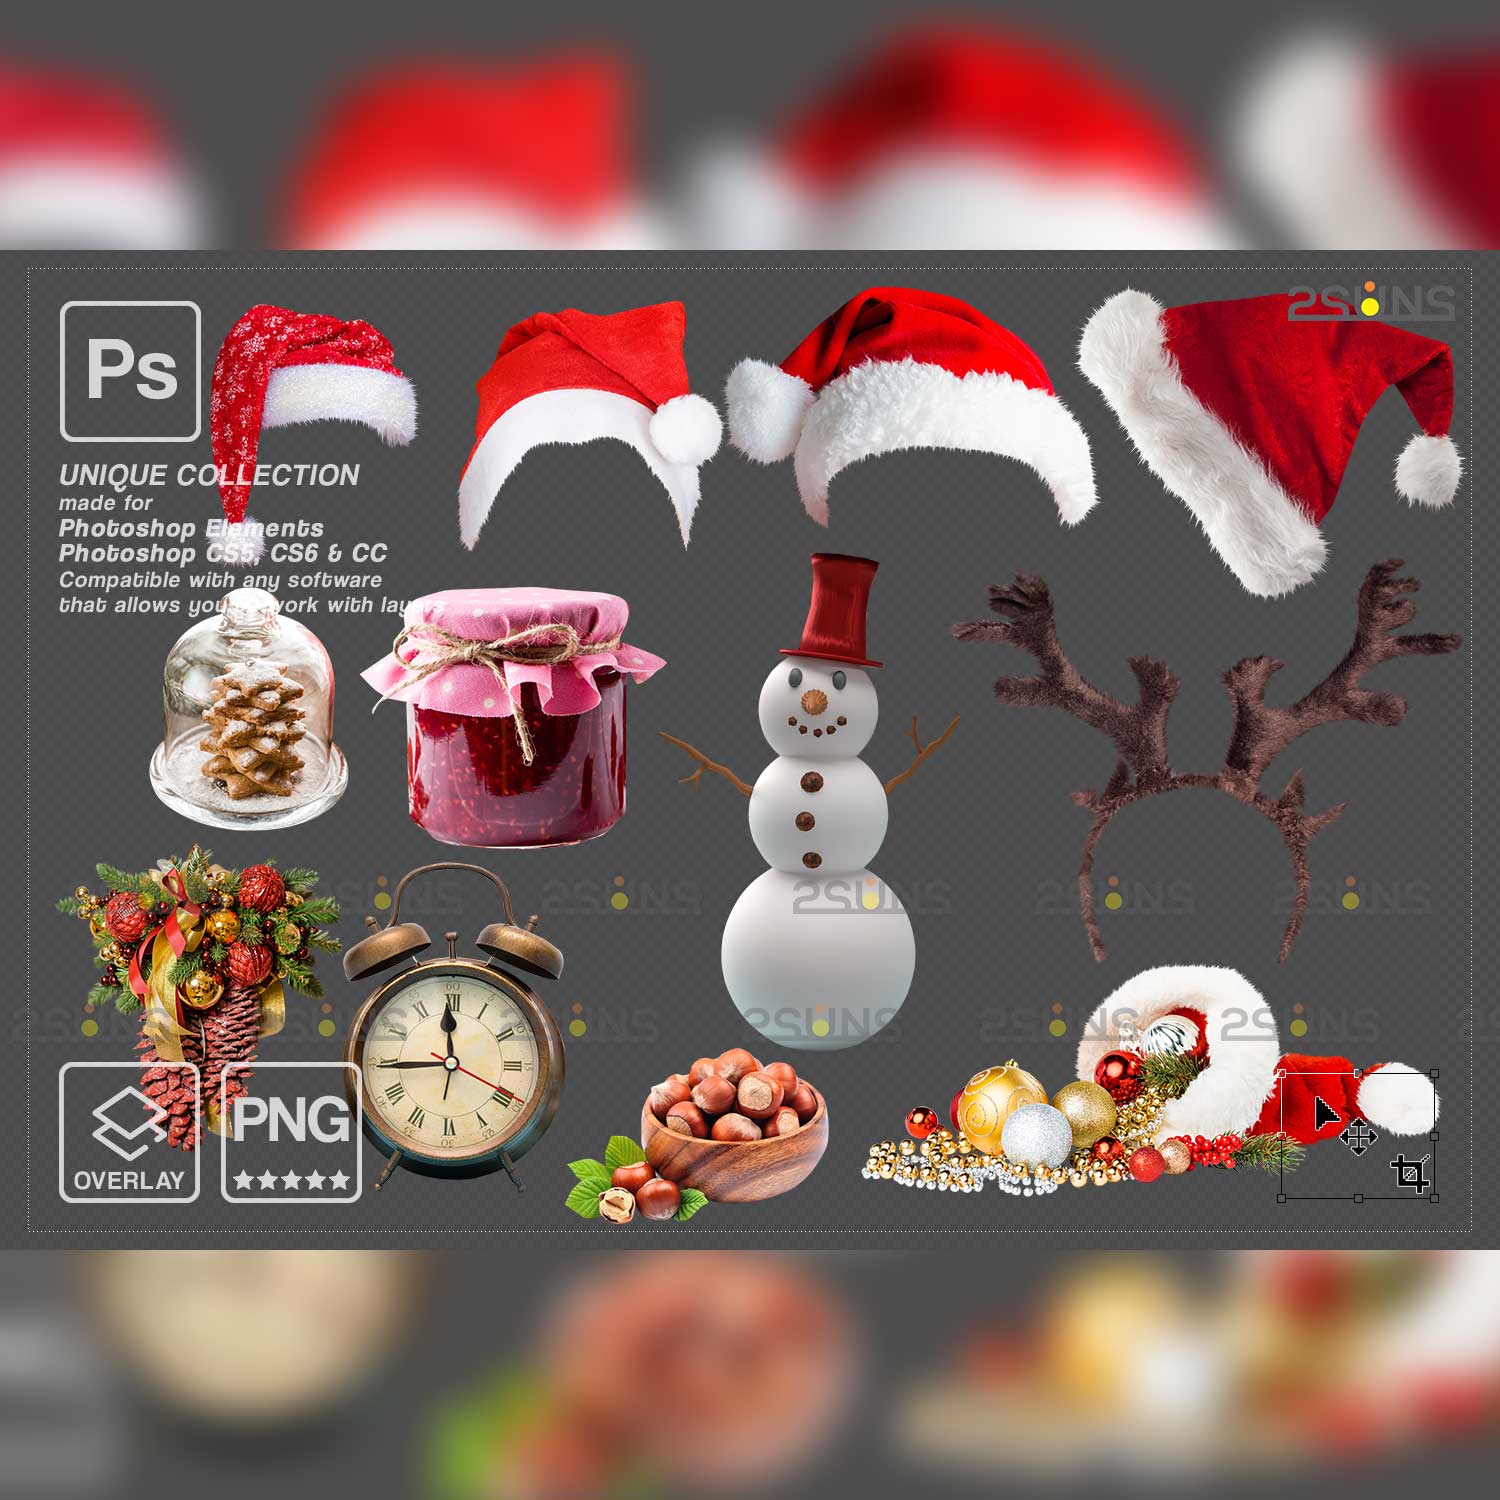 Sparkler overlay, Christmas overlay, Photoshop overlay, Christmas word overlay, Christmas clipart Christmas light overlay, Sparkler overlay elements.